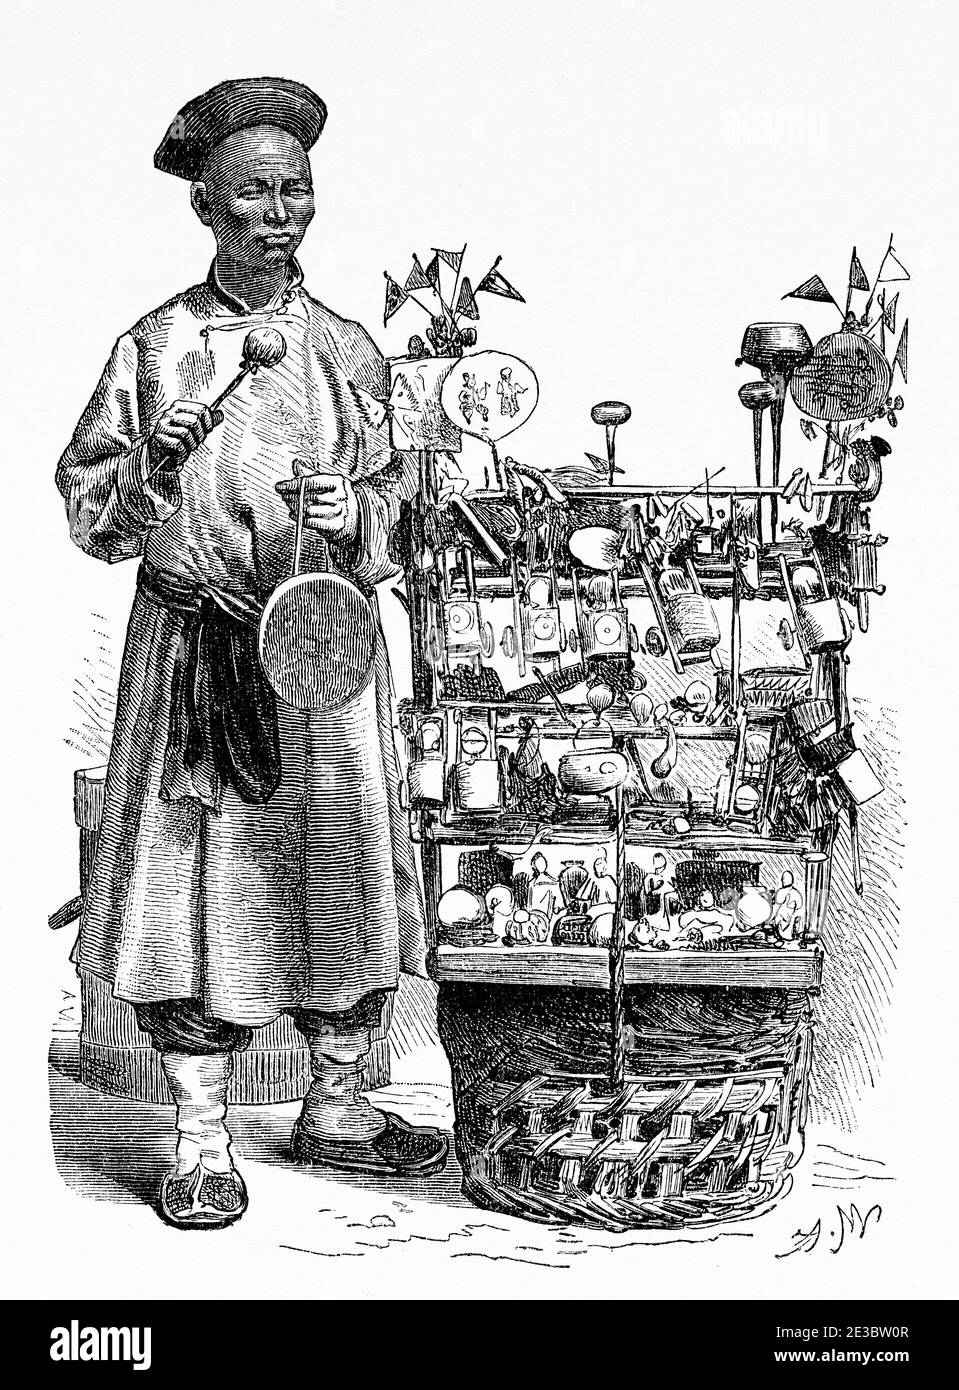 Reisen Spielzeug Verkäufer, Peking, China. Alte 19. Jahrhundert gravierte Illustration, Reise nach Peking und Nordchina 1873 Stockfoto